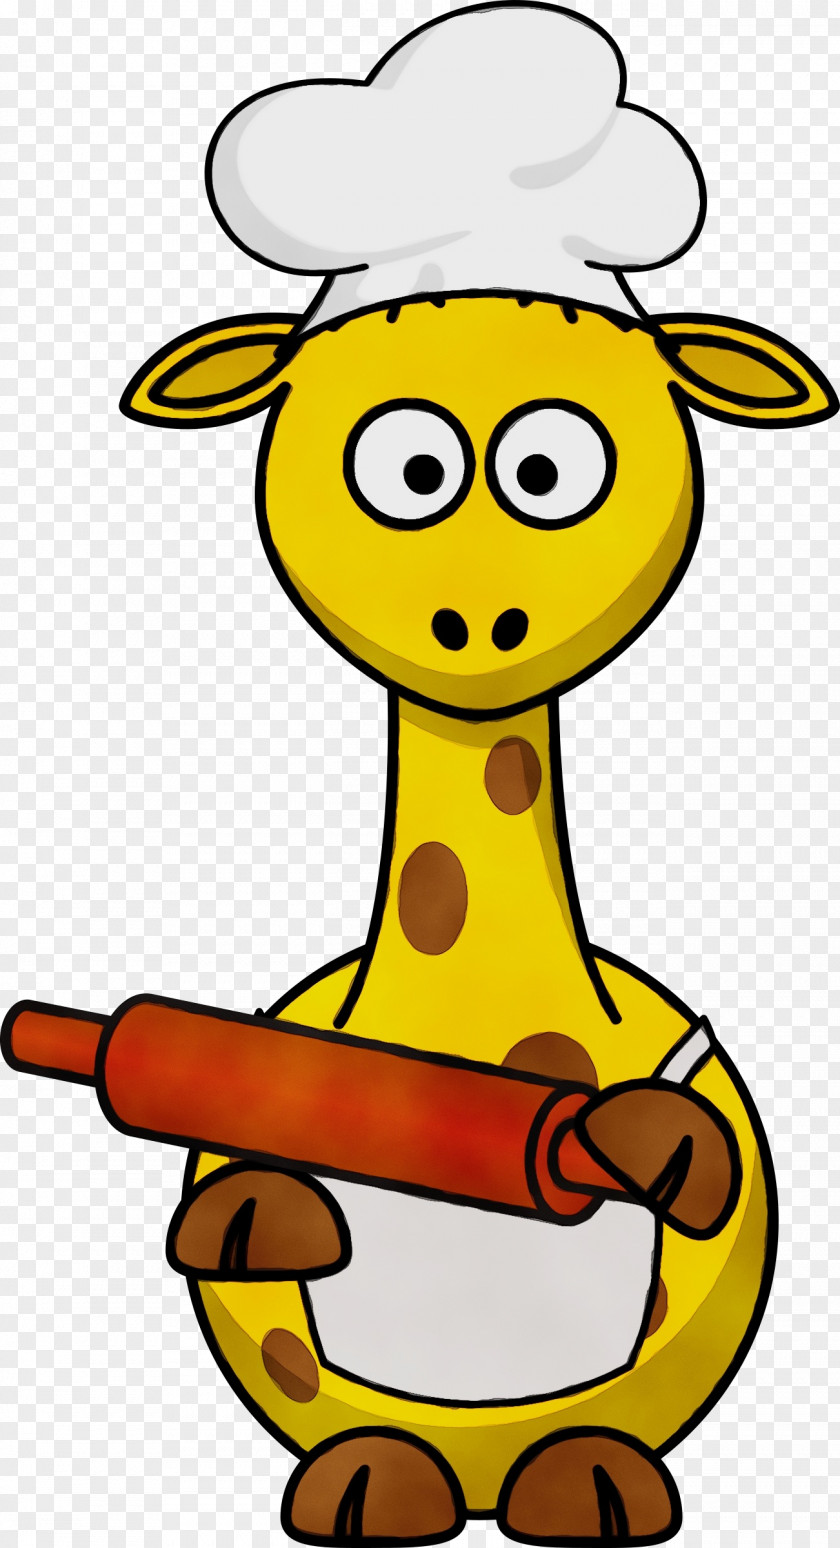 Hat Pleased Giraffe Cartoon PNG